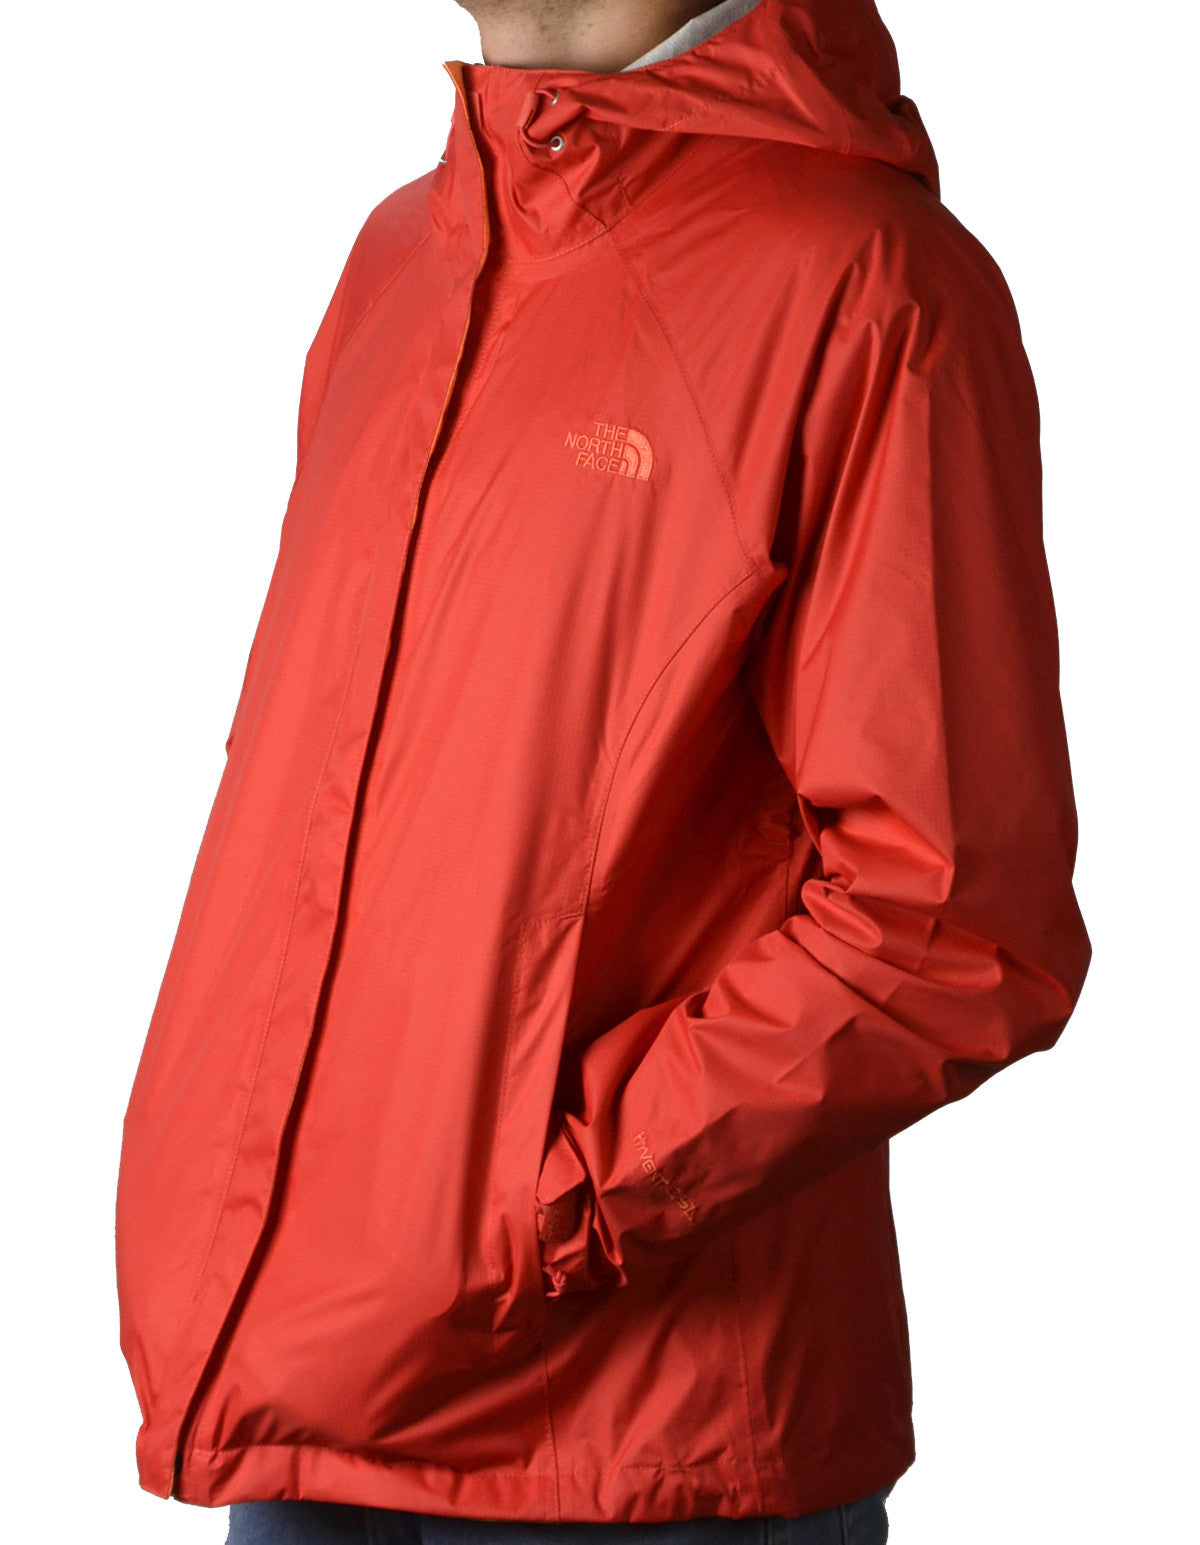 Stun Schurk Verbaasd The North Face Women's Venture Jacket/Melon Red - Andy Thornal Company